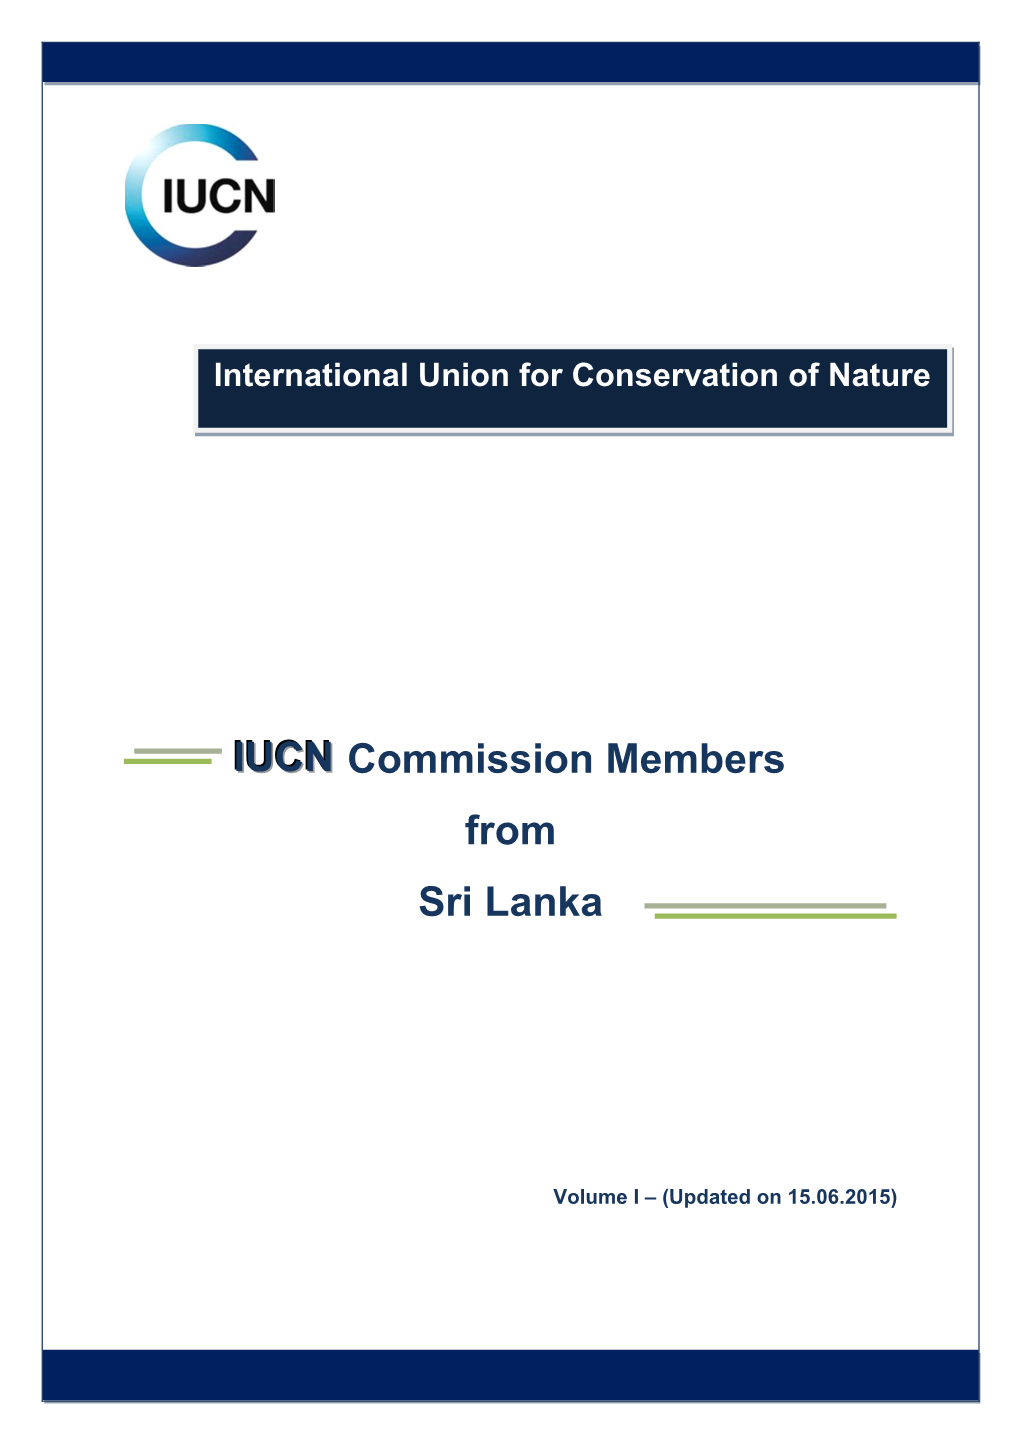 IUCN Commission Members from Sri Lanka